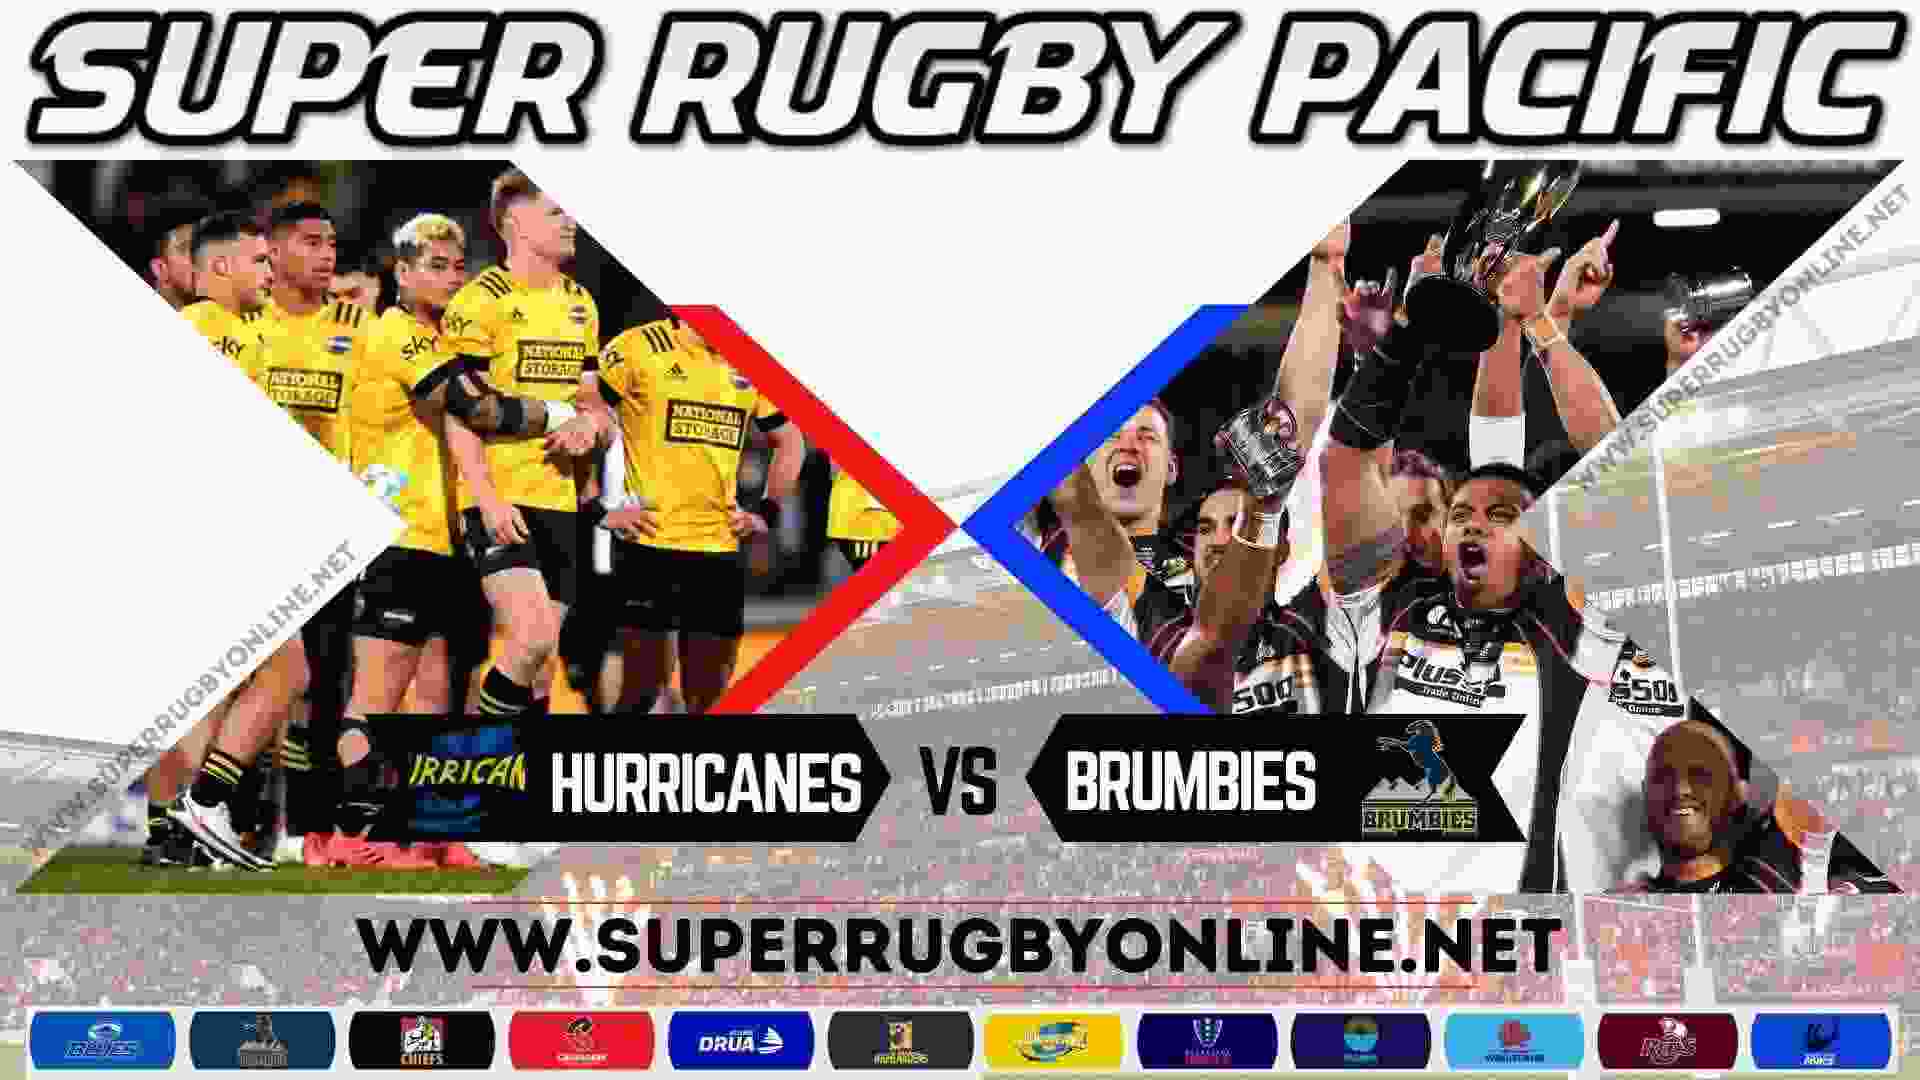 Brumbies VS Hurricanes Super Rugby Live Stream